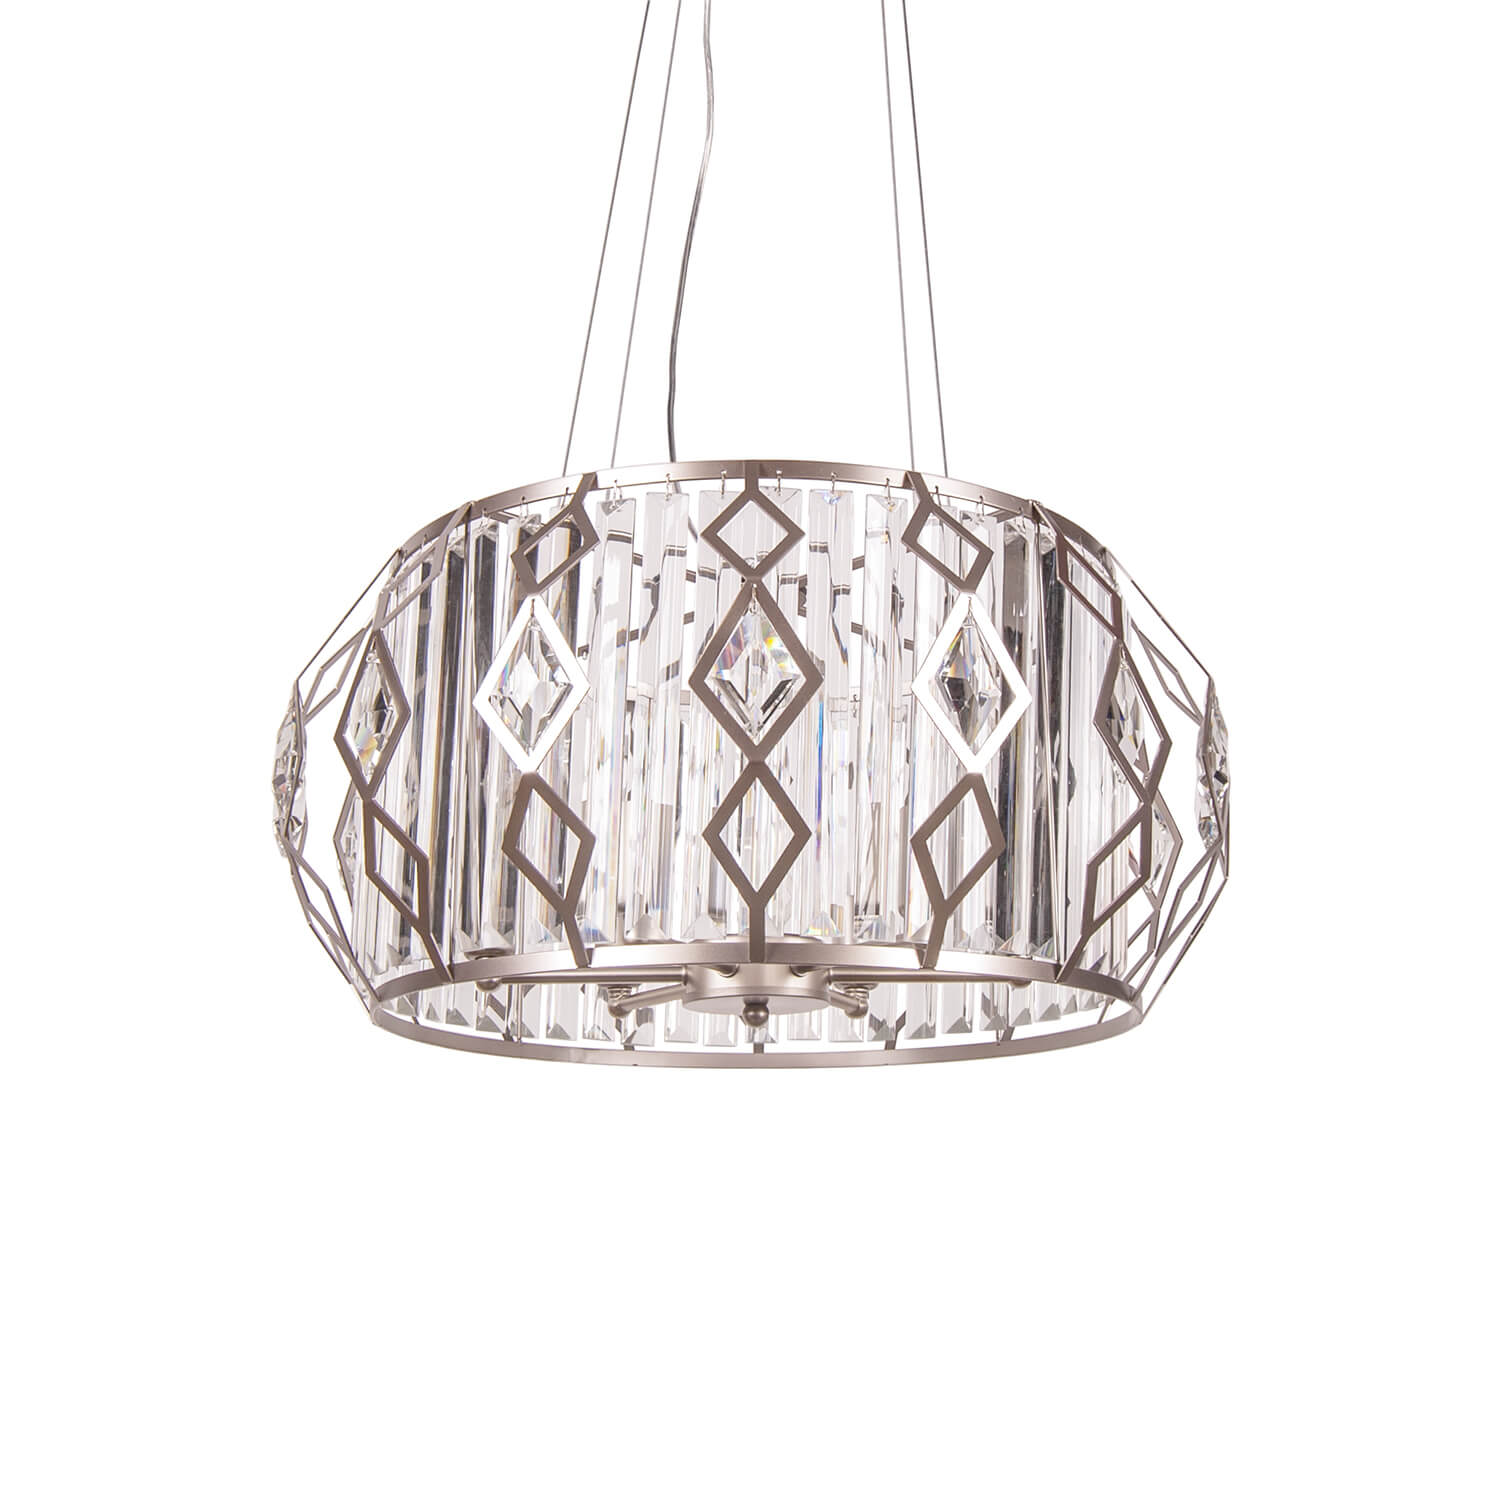 Candelabru argintiu de metal si sticla ASIFA S6 design clasic, glam pentru dining sau living